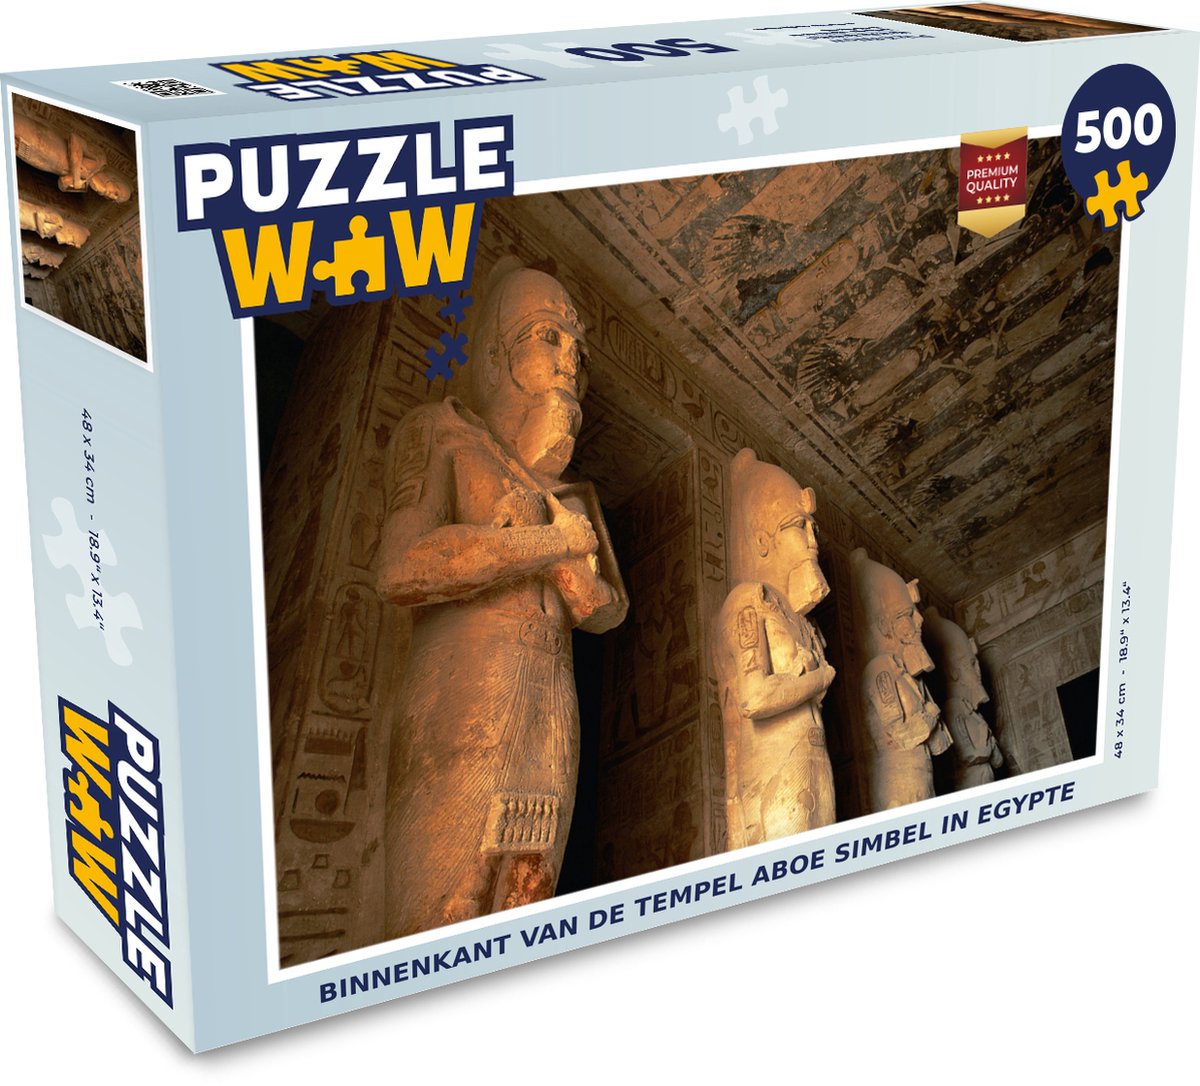 Puzzel Binnenkant van de Tempel Aboe Simbel in Egypte - Legpuzzel - Puzzel 500 stukjes - PuzzleWow